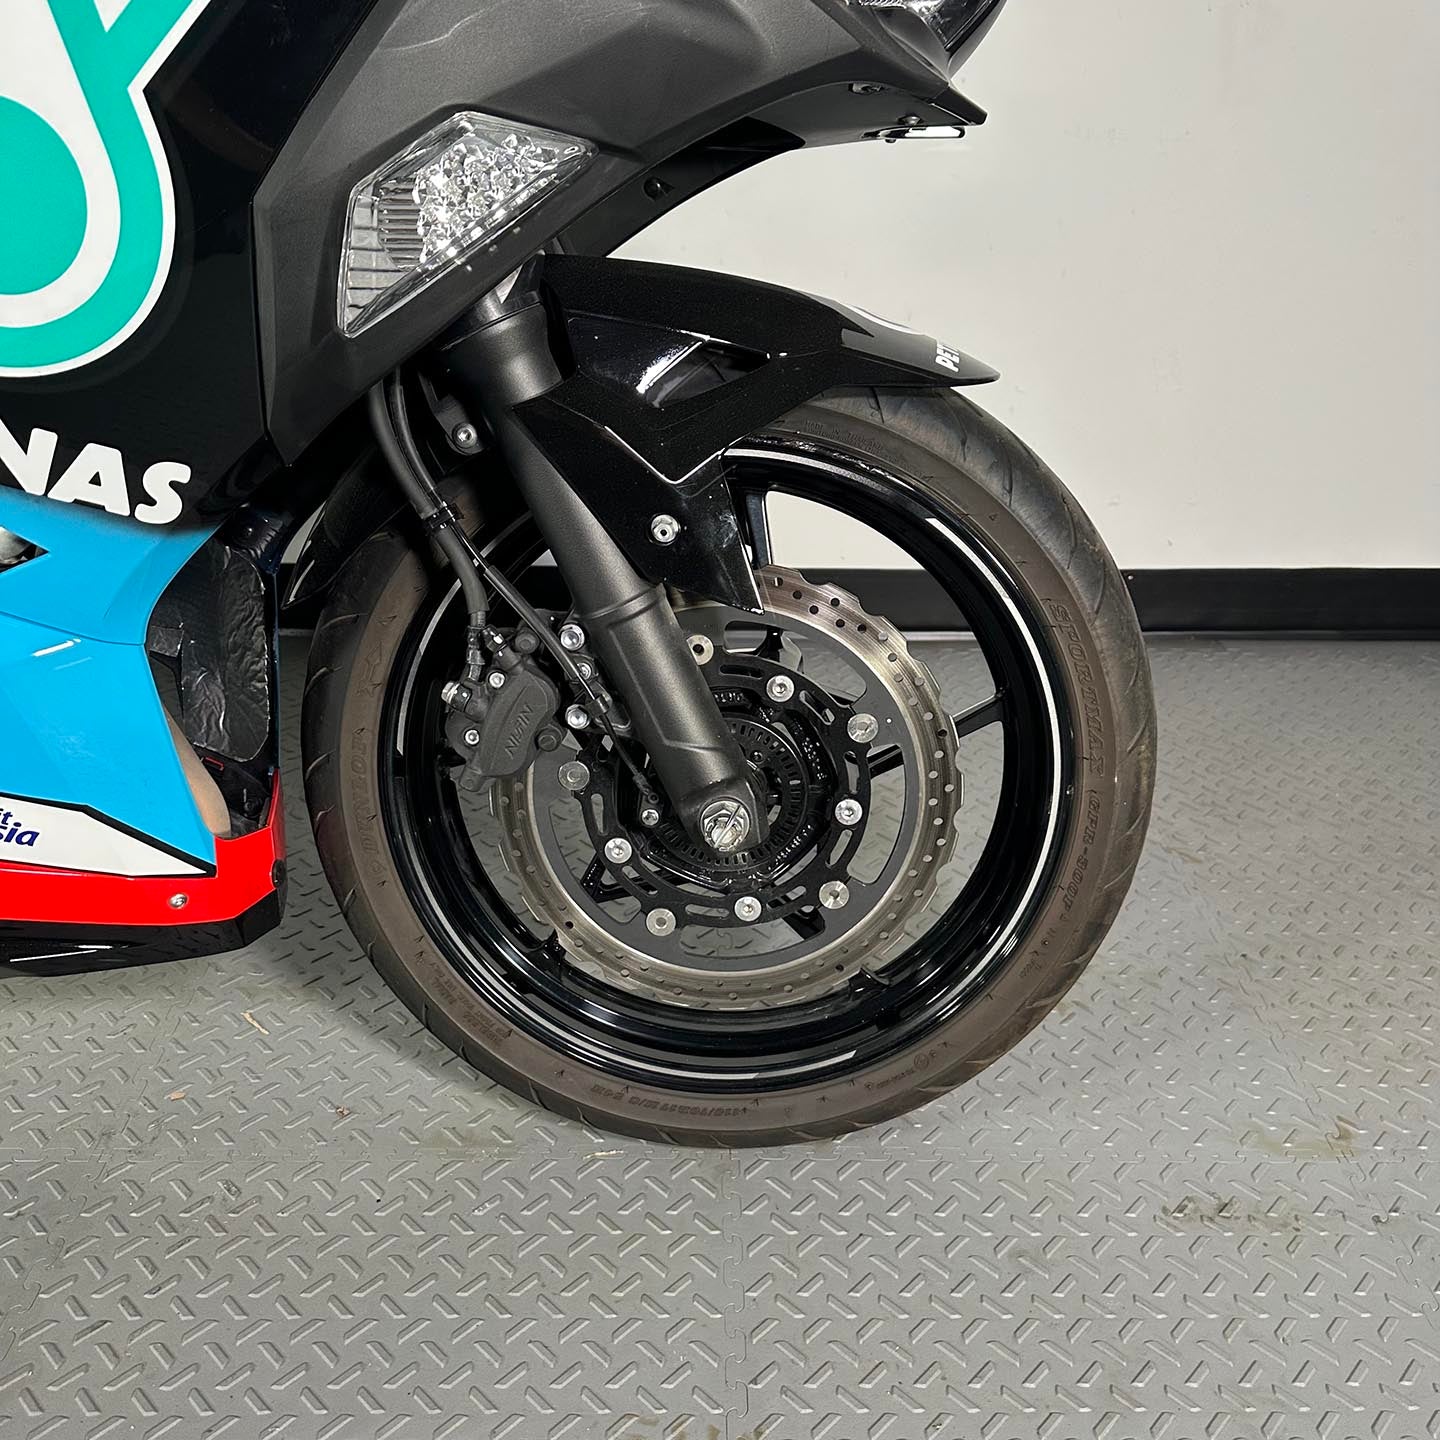 2021 Kawasaki Ninja 400 Abs (5,858 Miles)